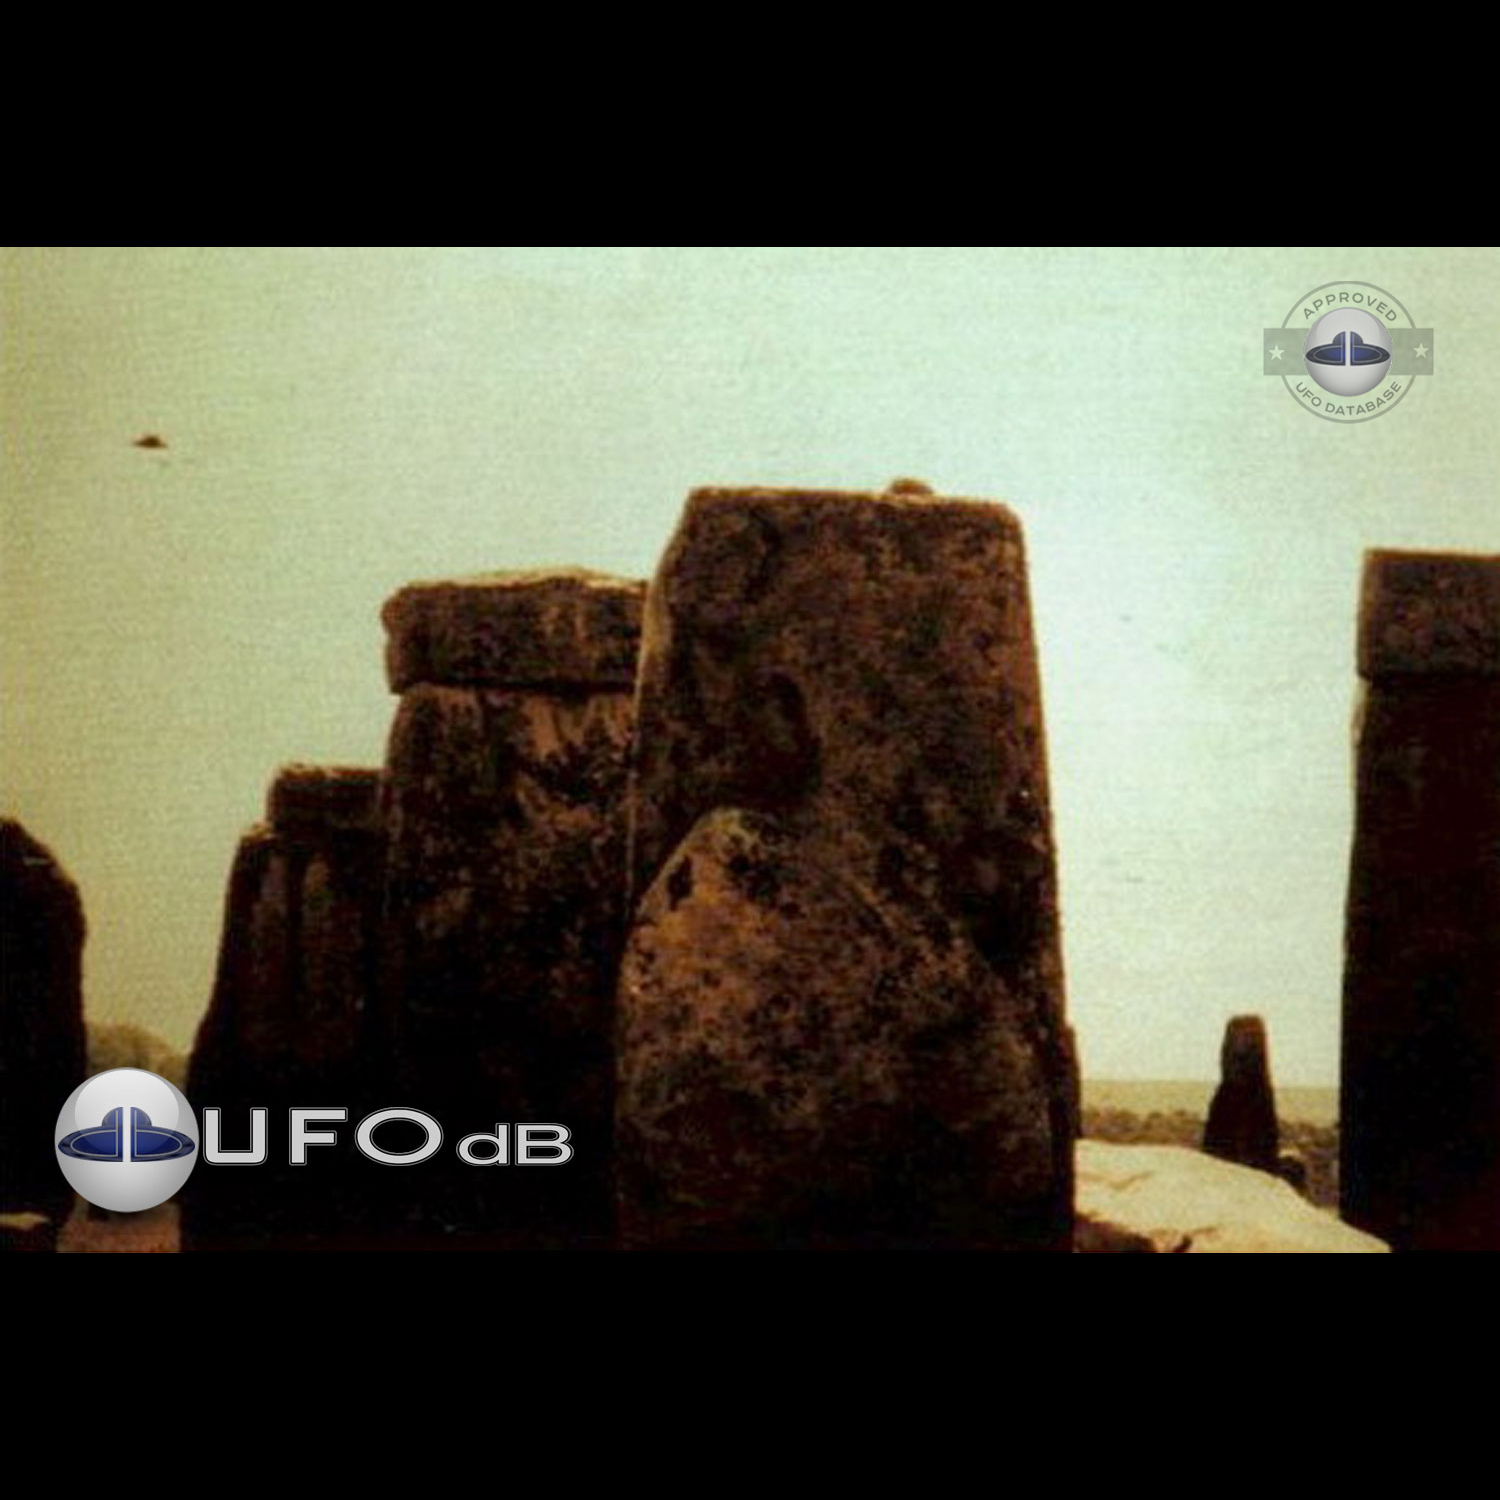 UFO Picture taken near the famous Stonehenge prehistoric monument UFO Picture #49-1